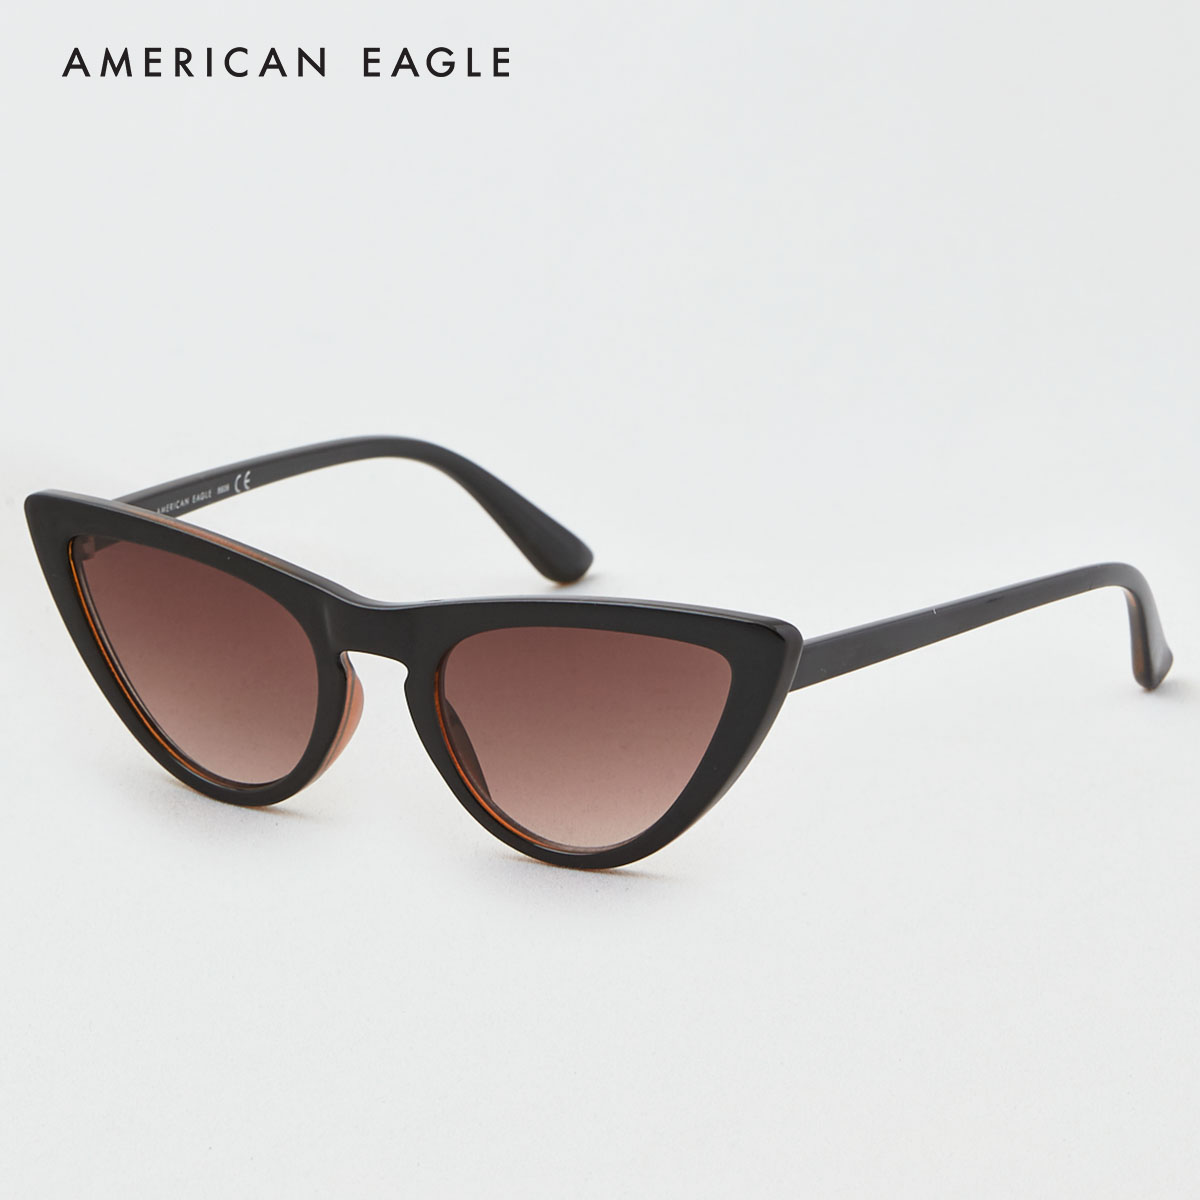 American Eagle Tortoise Cat Eye Sunglasses แว่นตา ผู้หญิง แฟชั่น(048-8606-251)